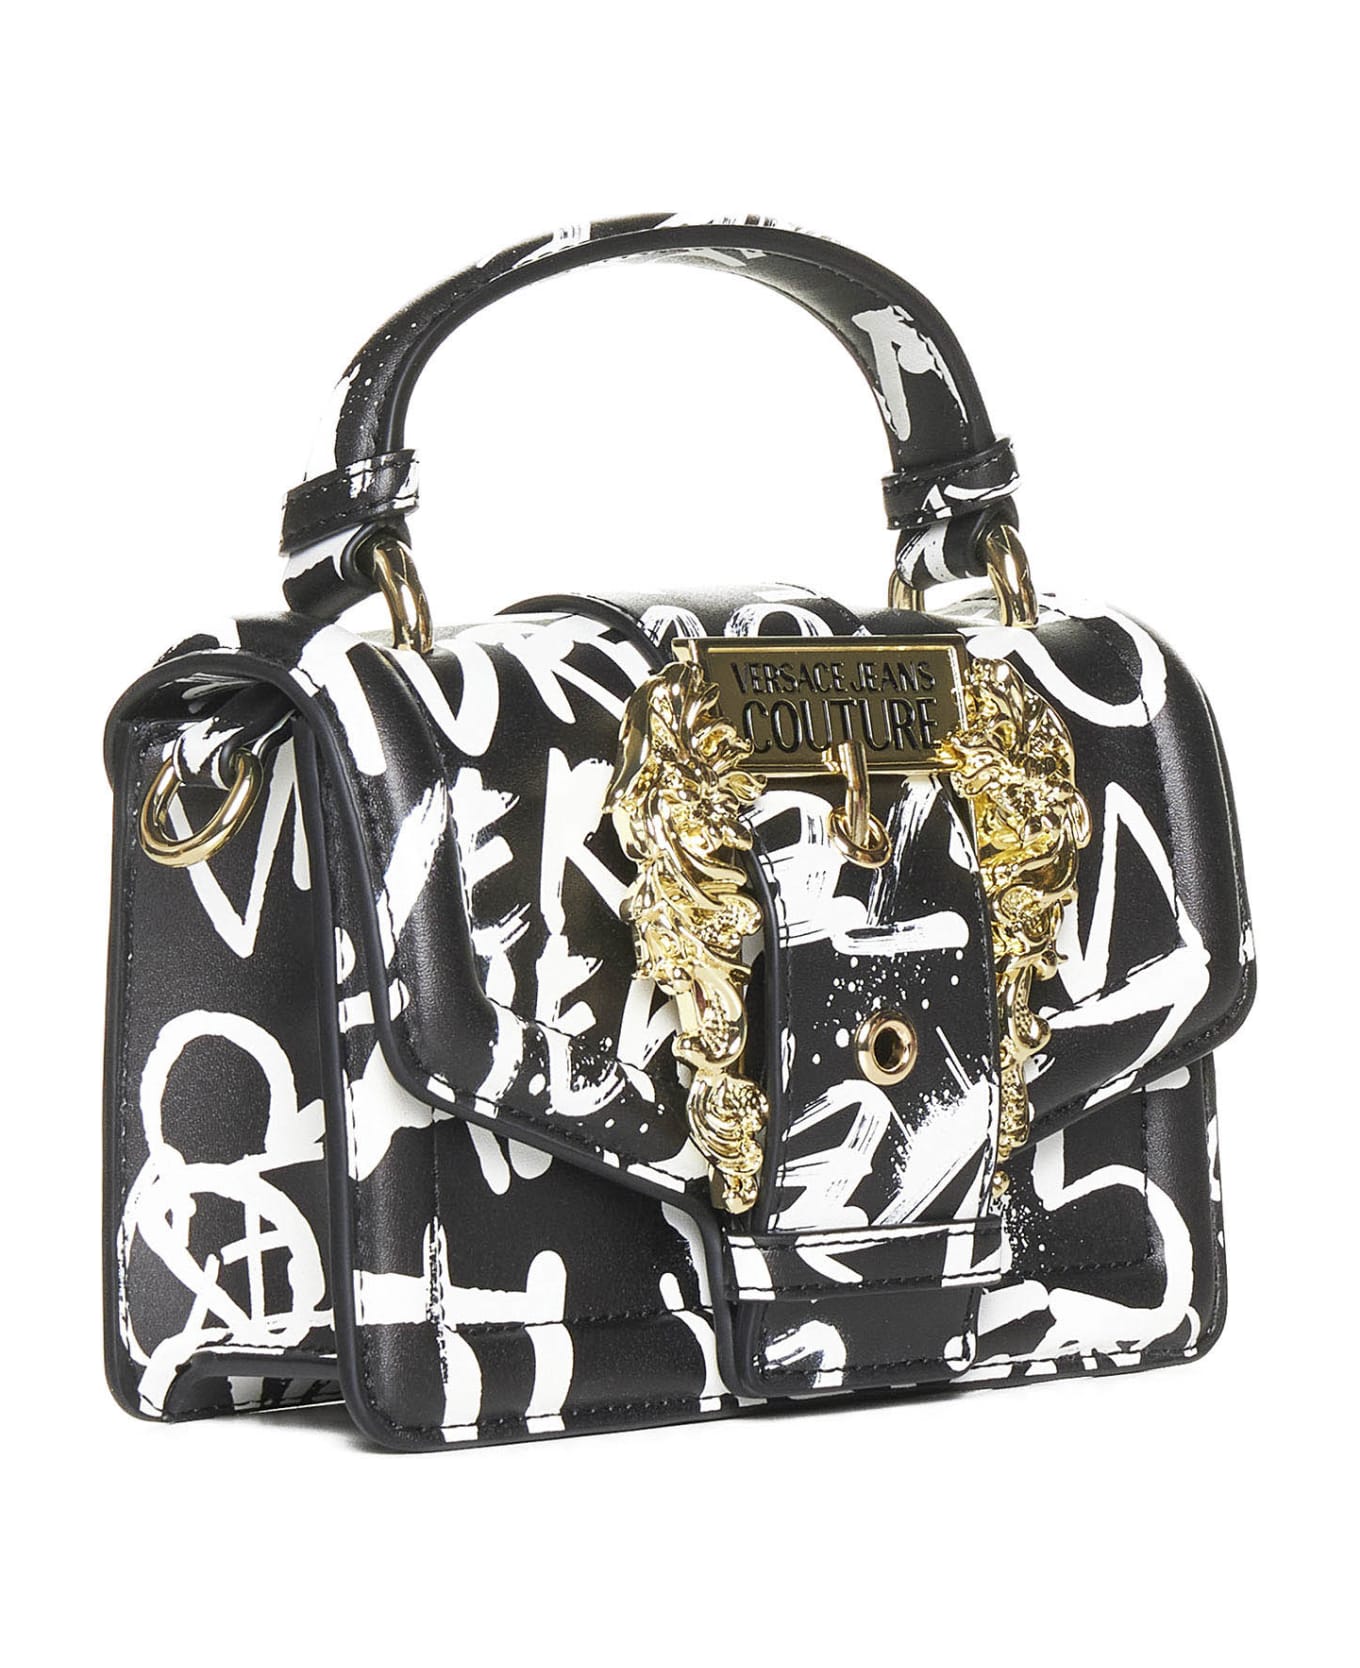 Versace Jeans Couture Logo Graffiti Handbag - Black white トートバッグ